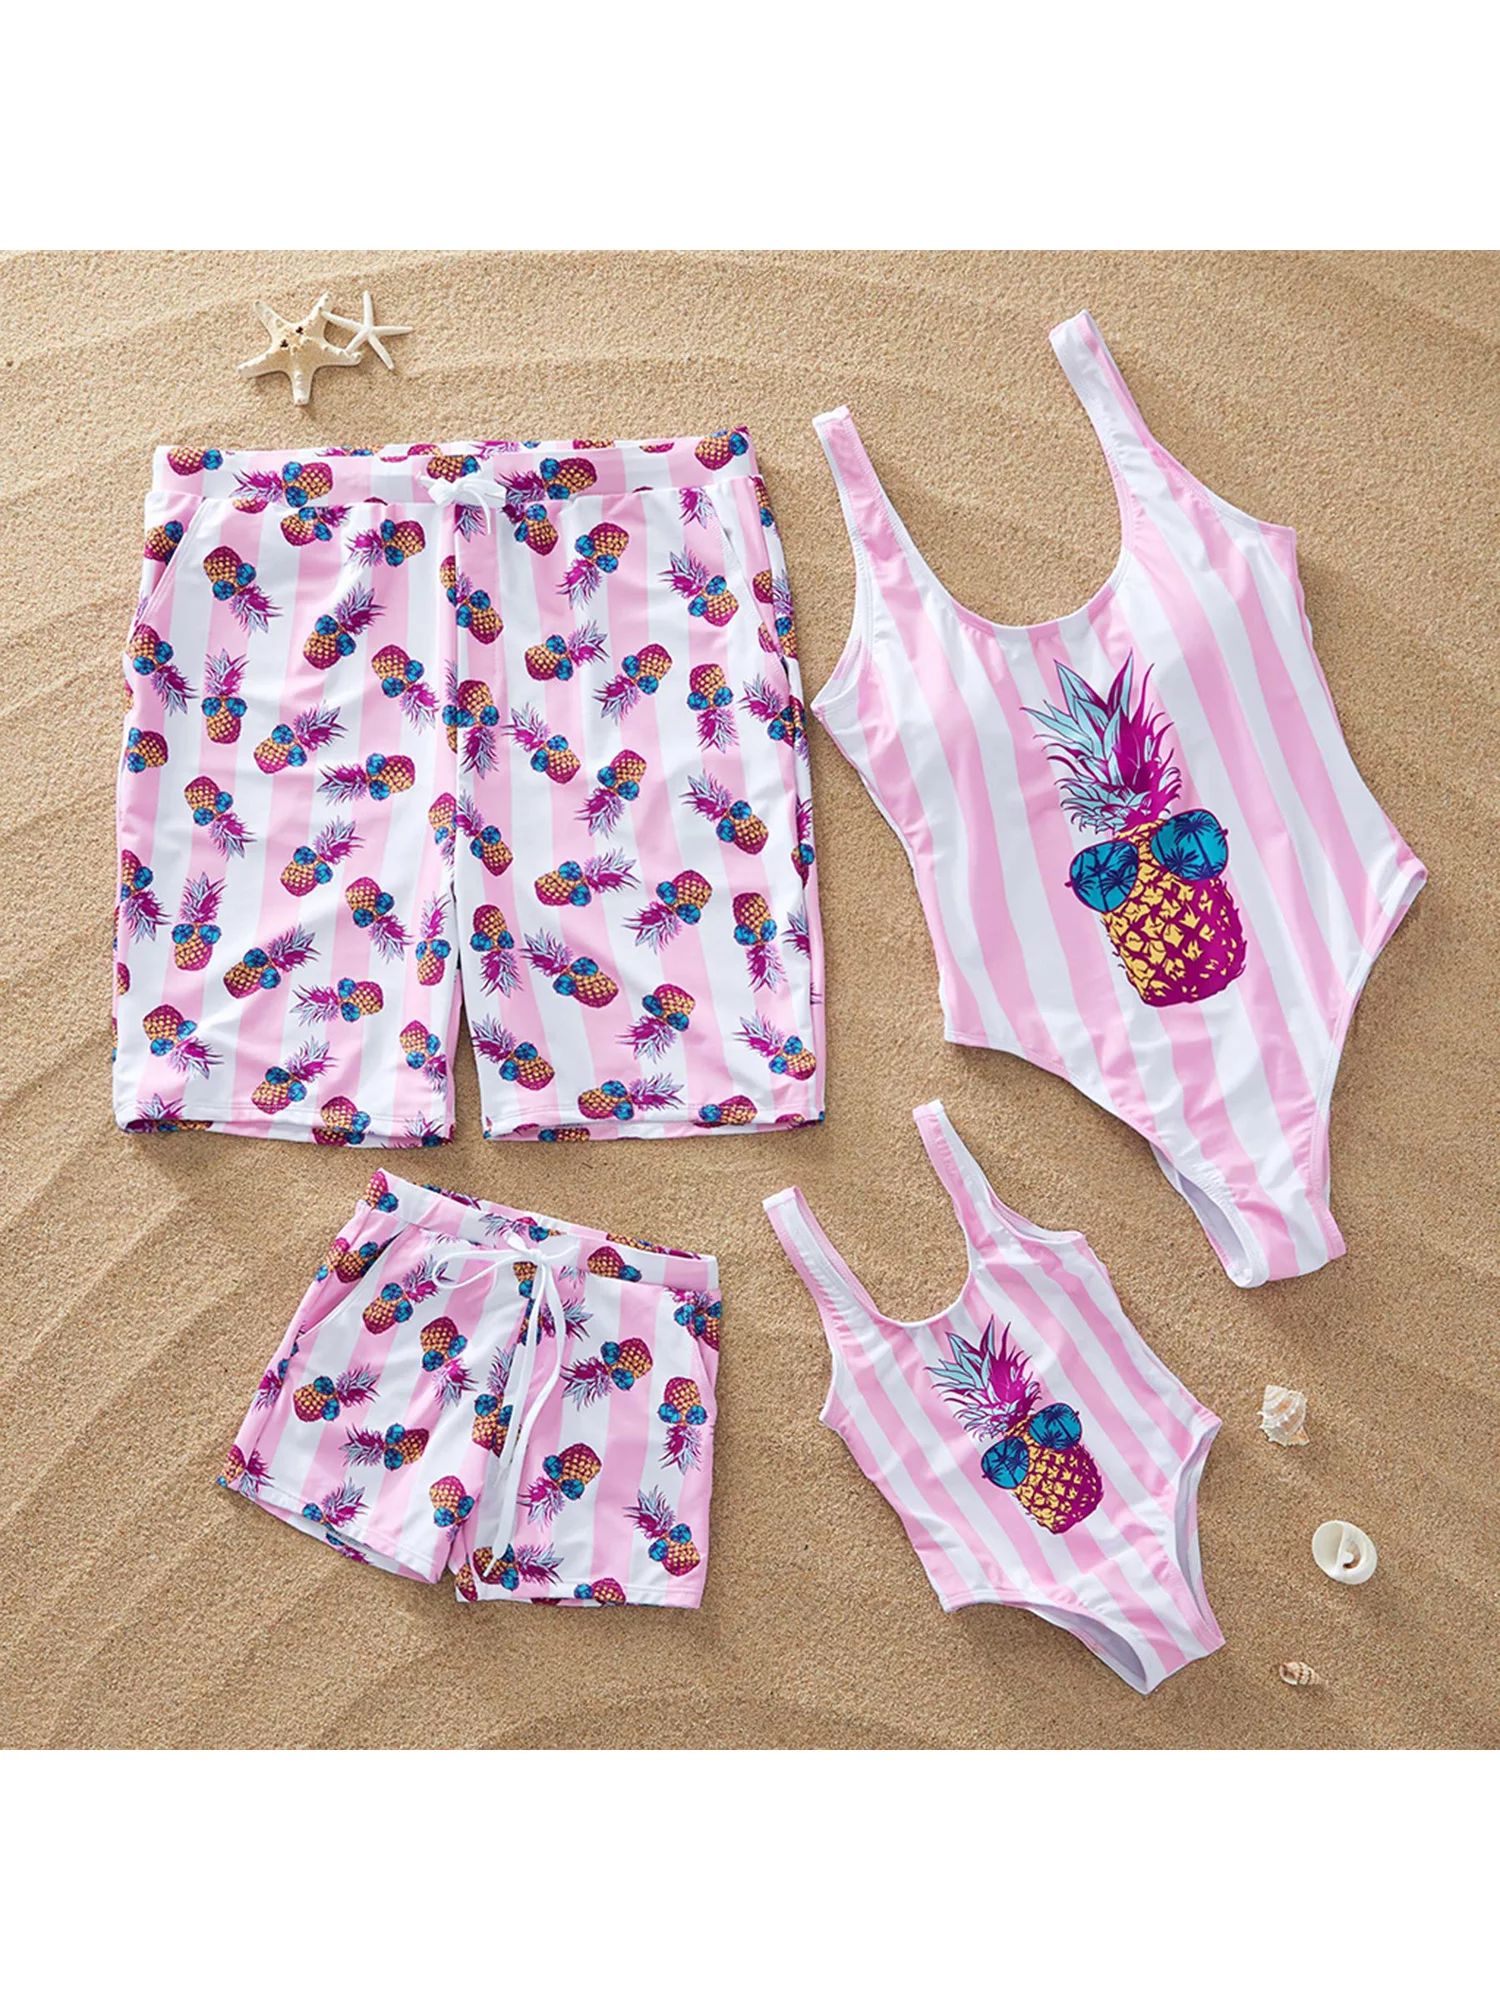 PatPat Cool Stripes Pineapple Beach Swimsuit for Women/Men,One Piece | Walmart (US)